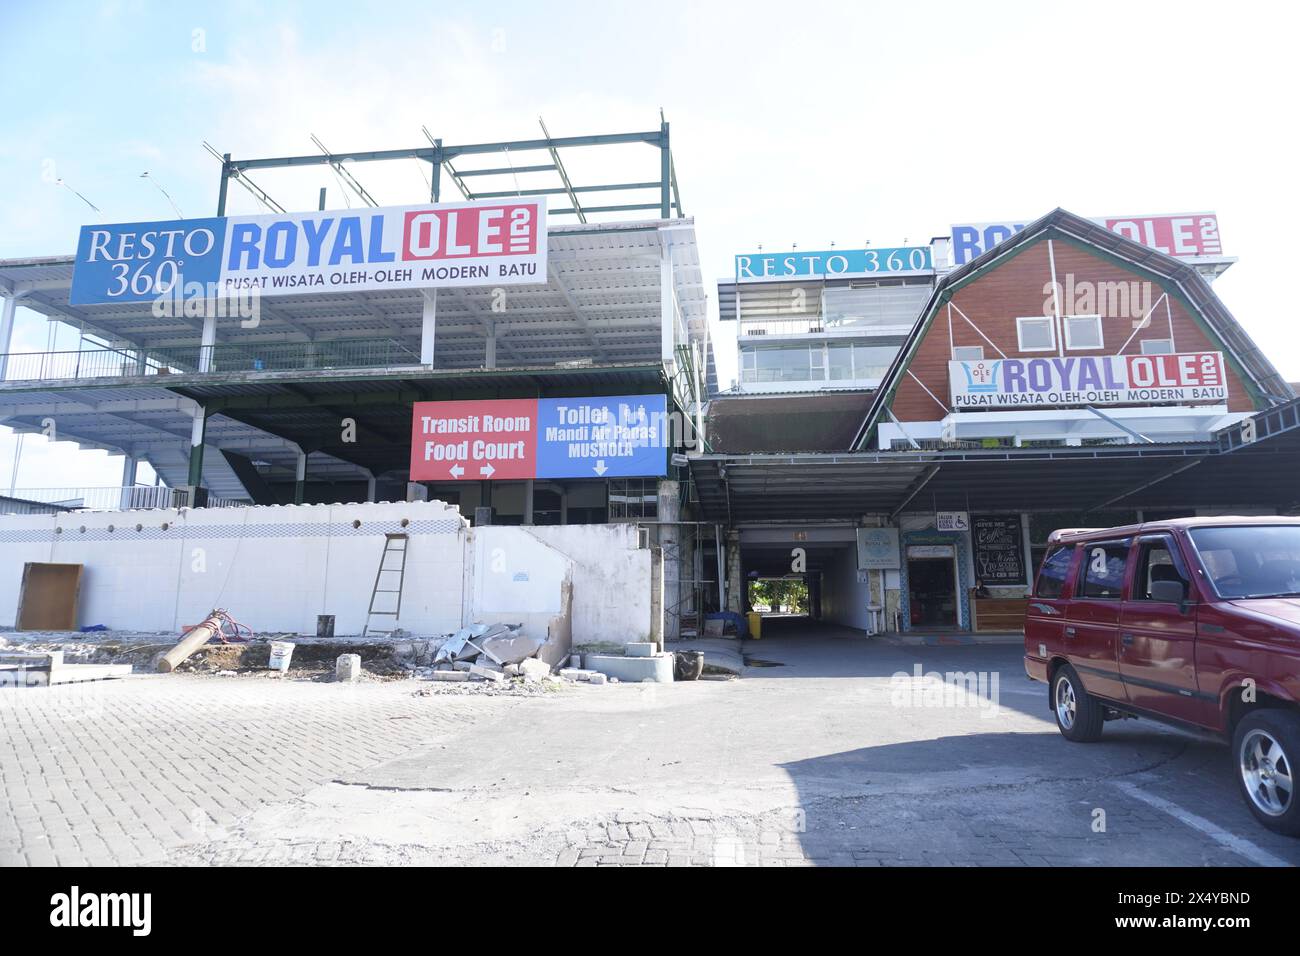 Royal Ole is a shopping tourist spot in Batu, Indonesia Stock Photo